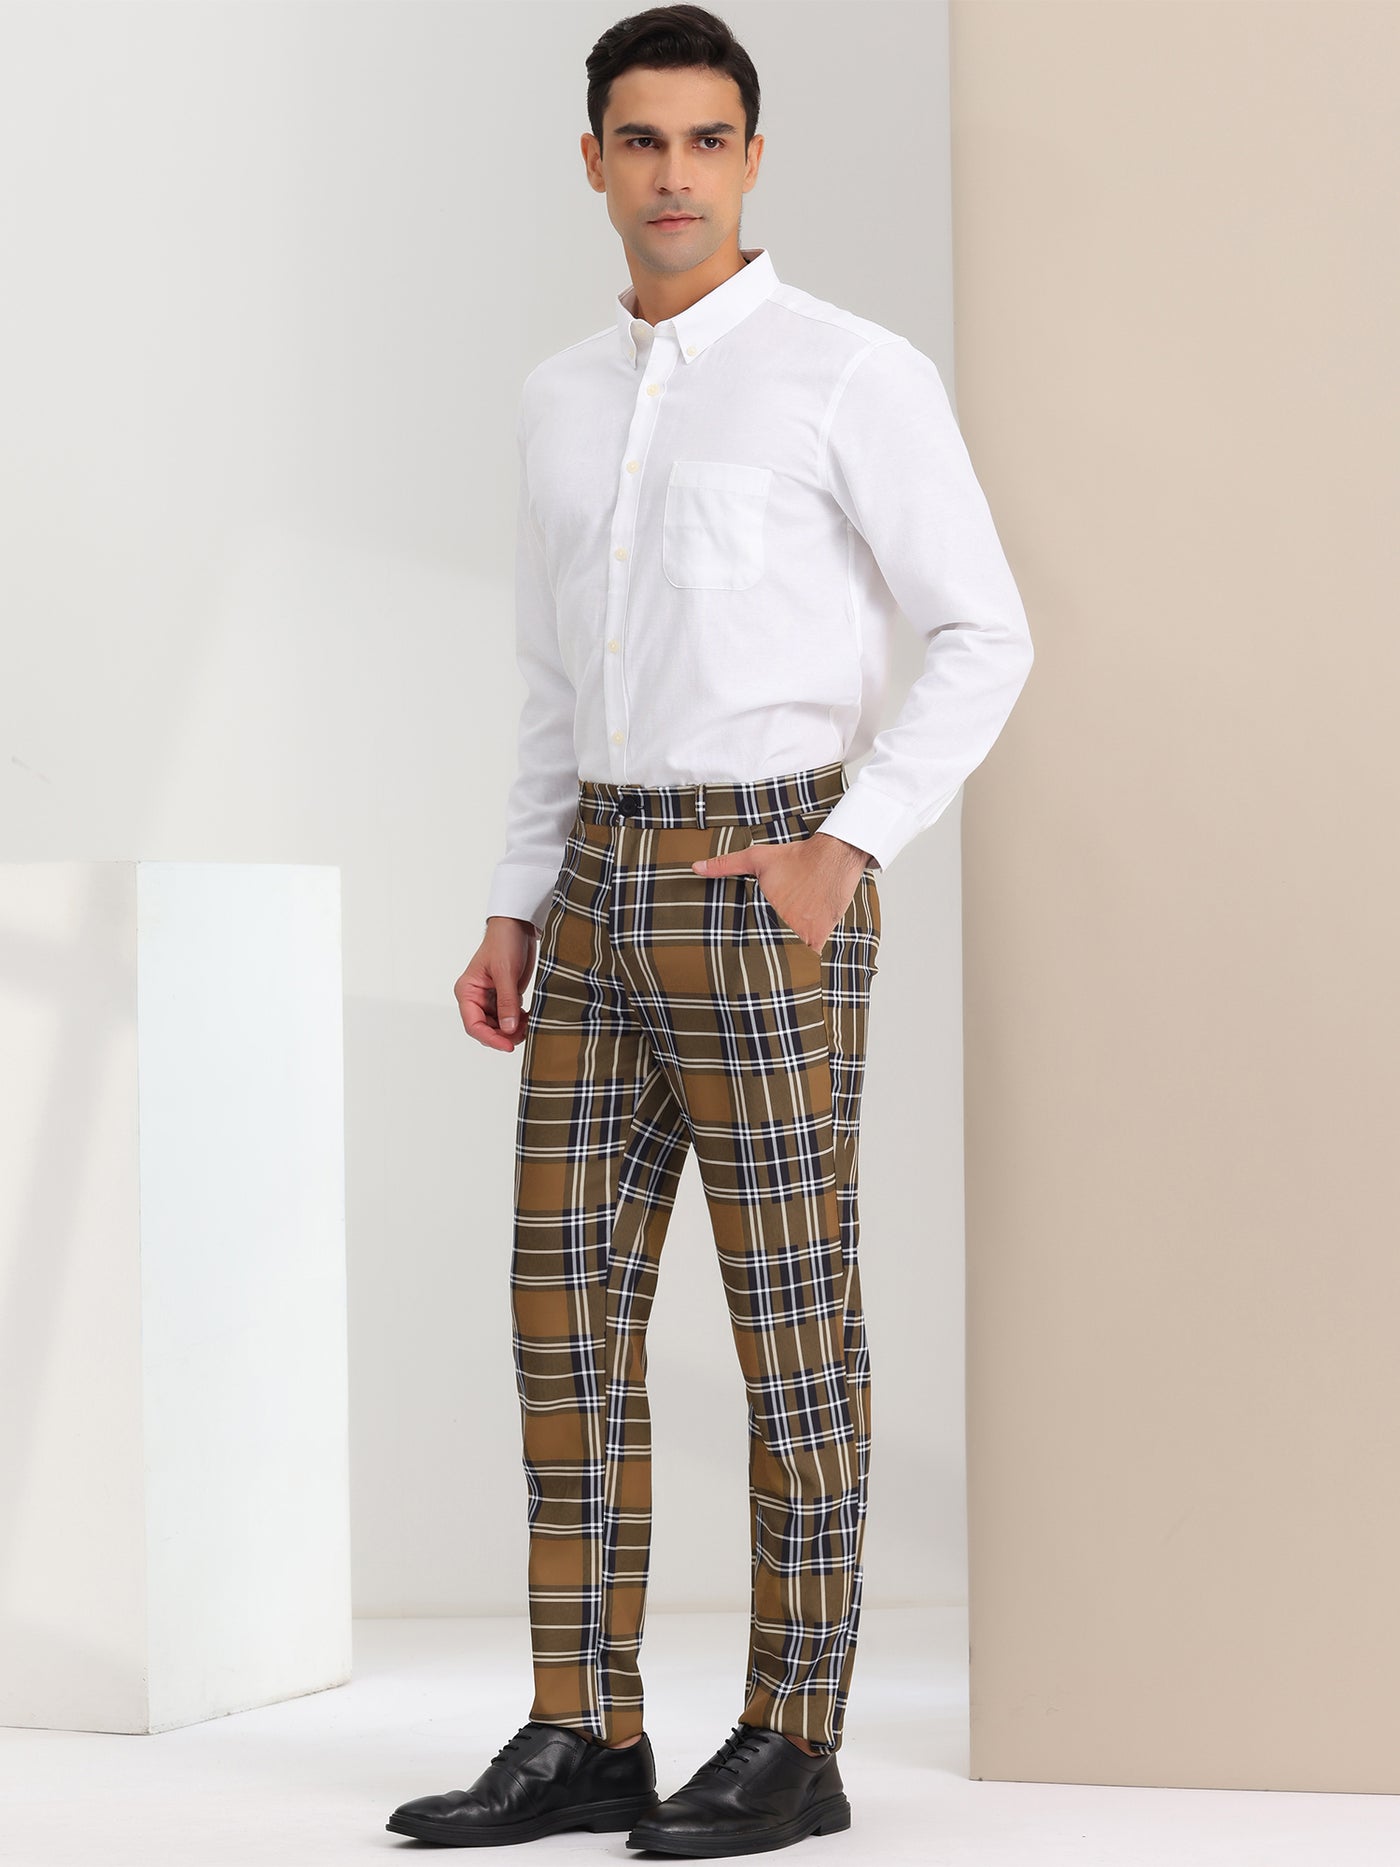 Bublédon Men's Plaid Slacks Regular Fit Flat Front Work Prom Checked Pants